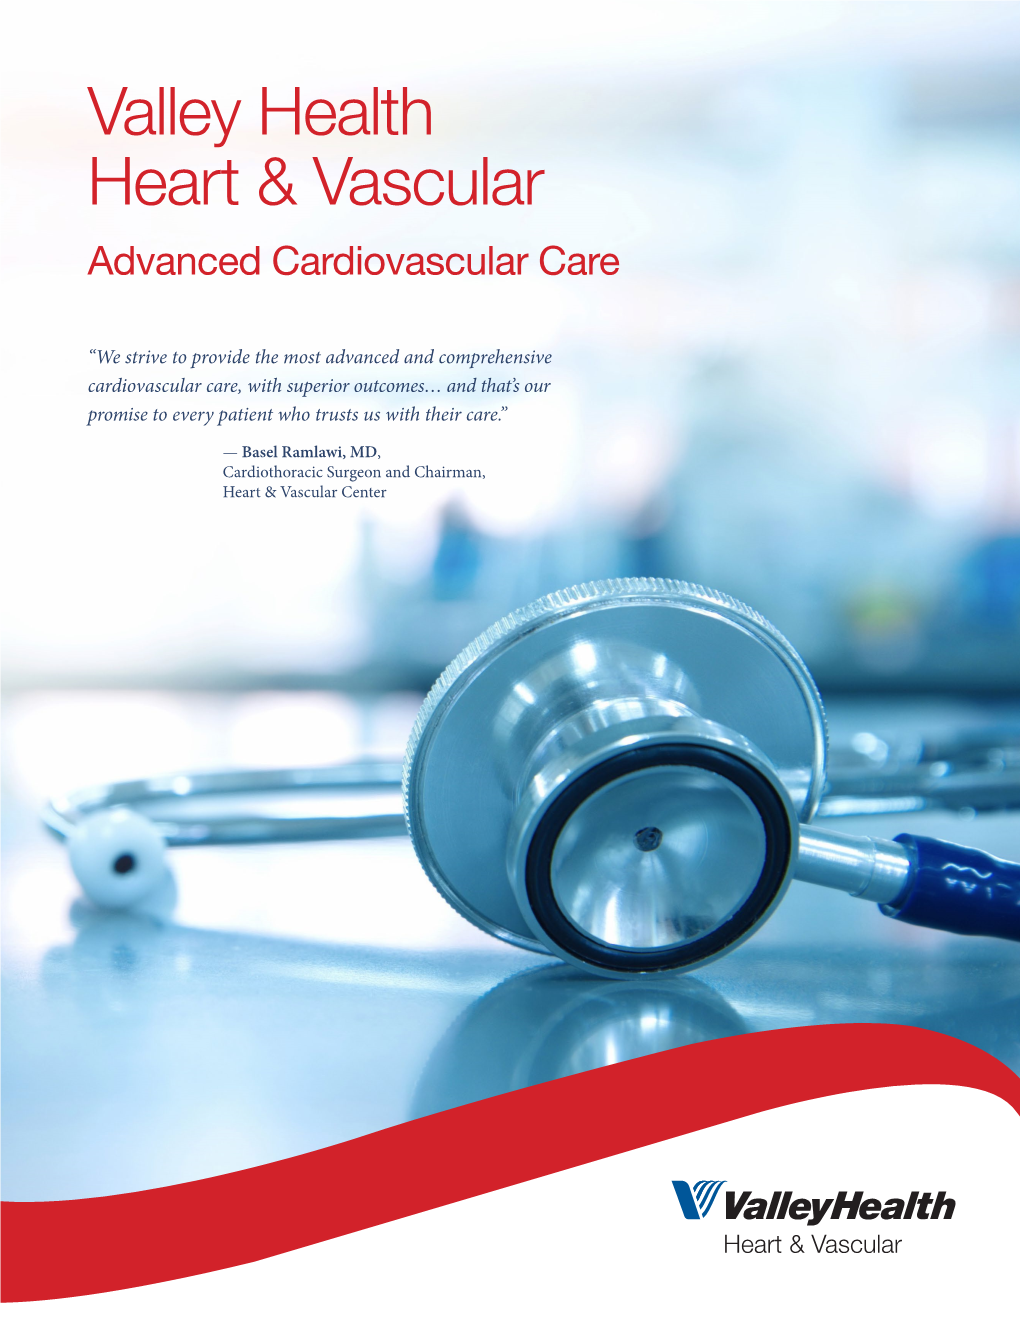 Valley Health Heart & Vascular